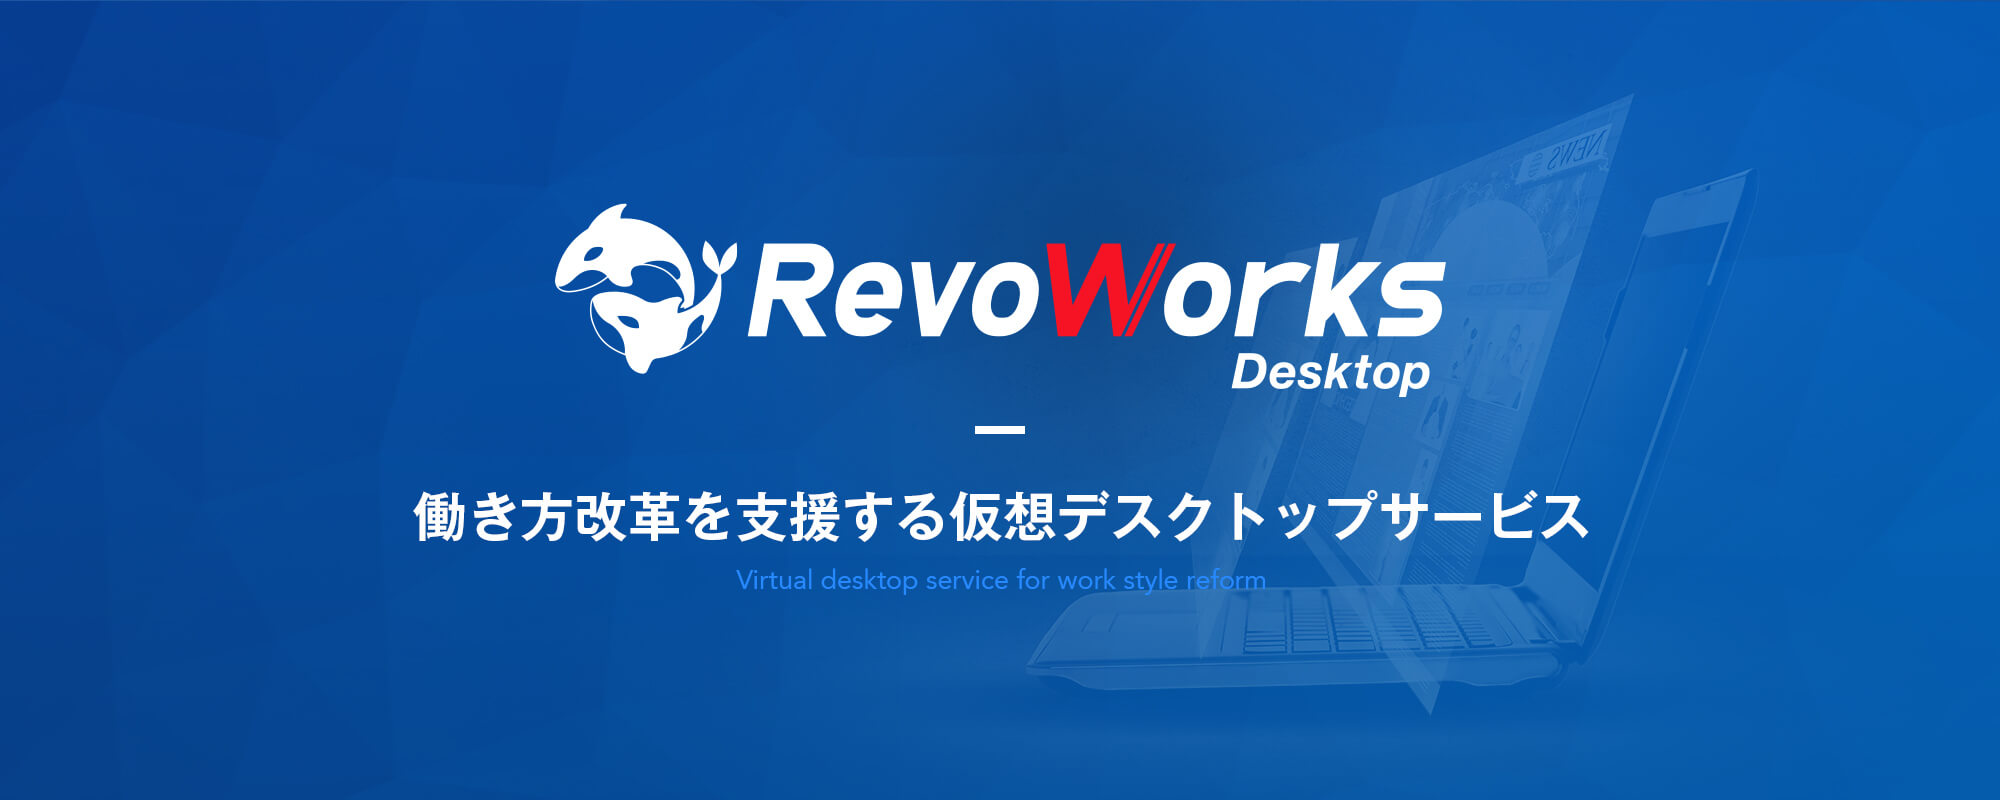 revoworks-desktop